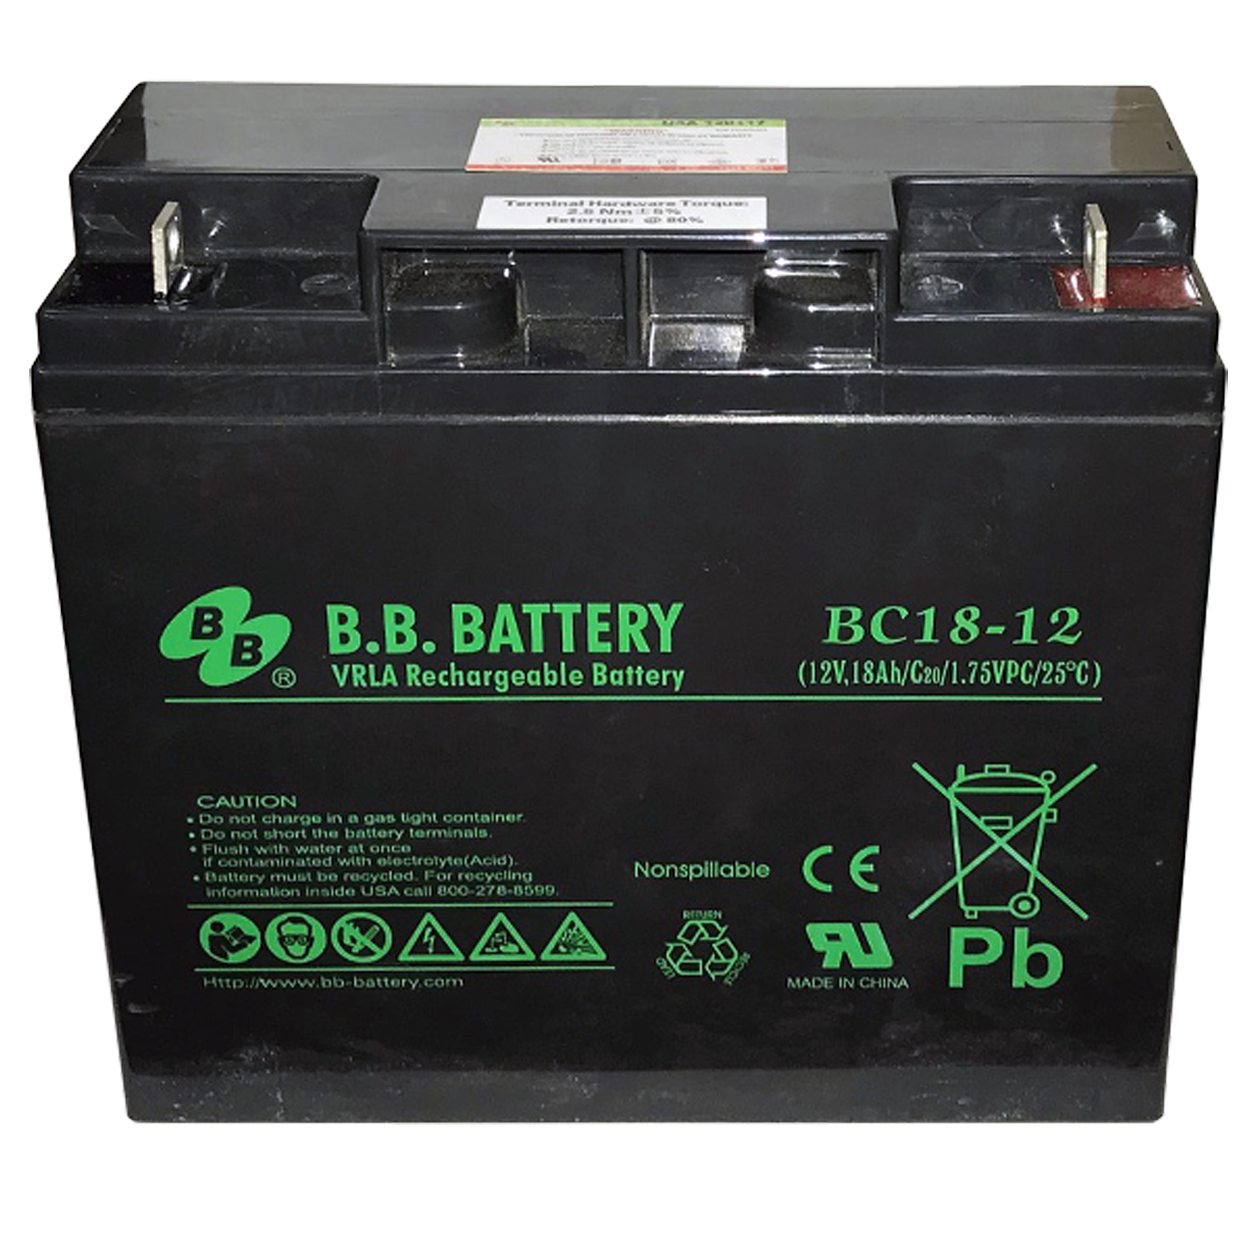 B b battery 12 12. Аккумулятор Yuasa 12v 18ah. B.B.Battery evp20-12fr. B.B. Battery HR 9-12. Аккумуляторы в упс 24 двойные.